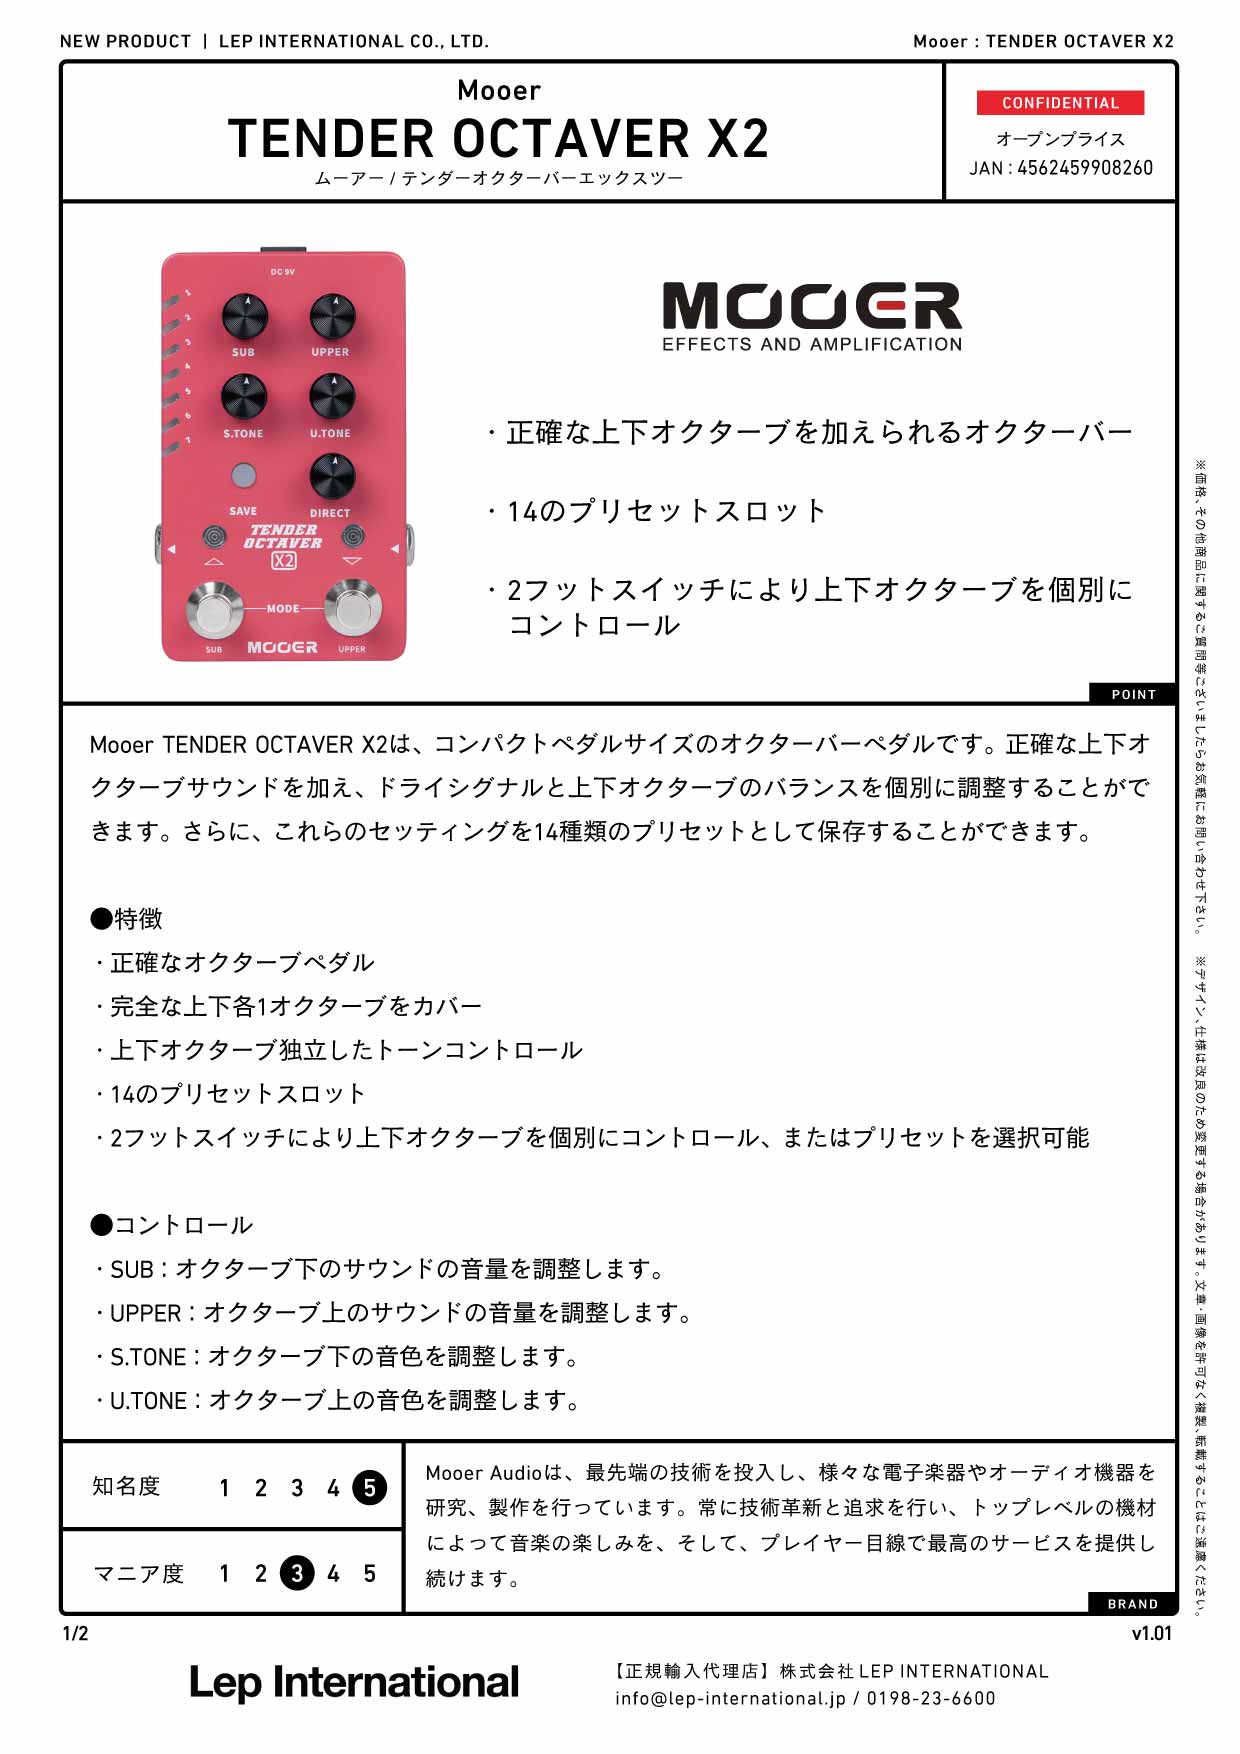 Mooer / TENDER OCTAVER X2